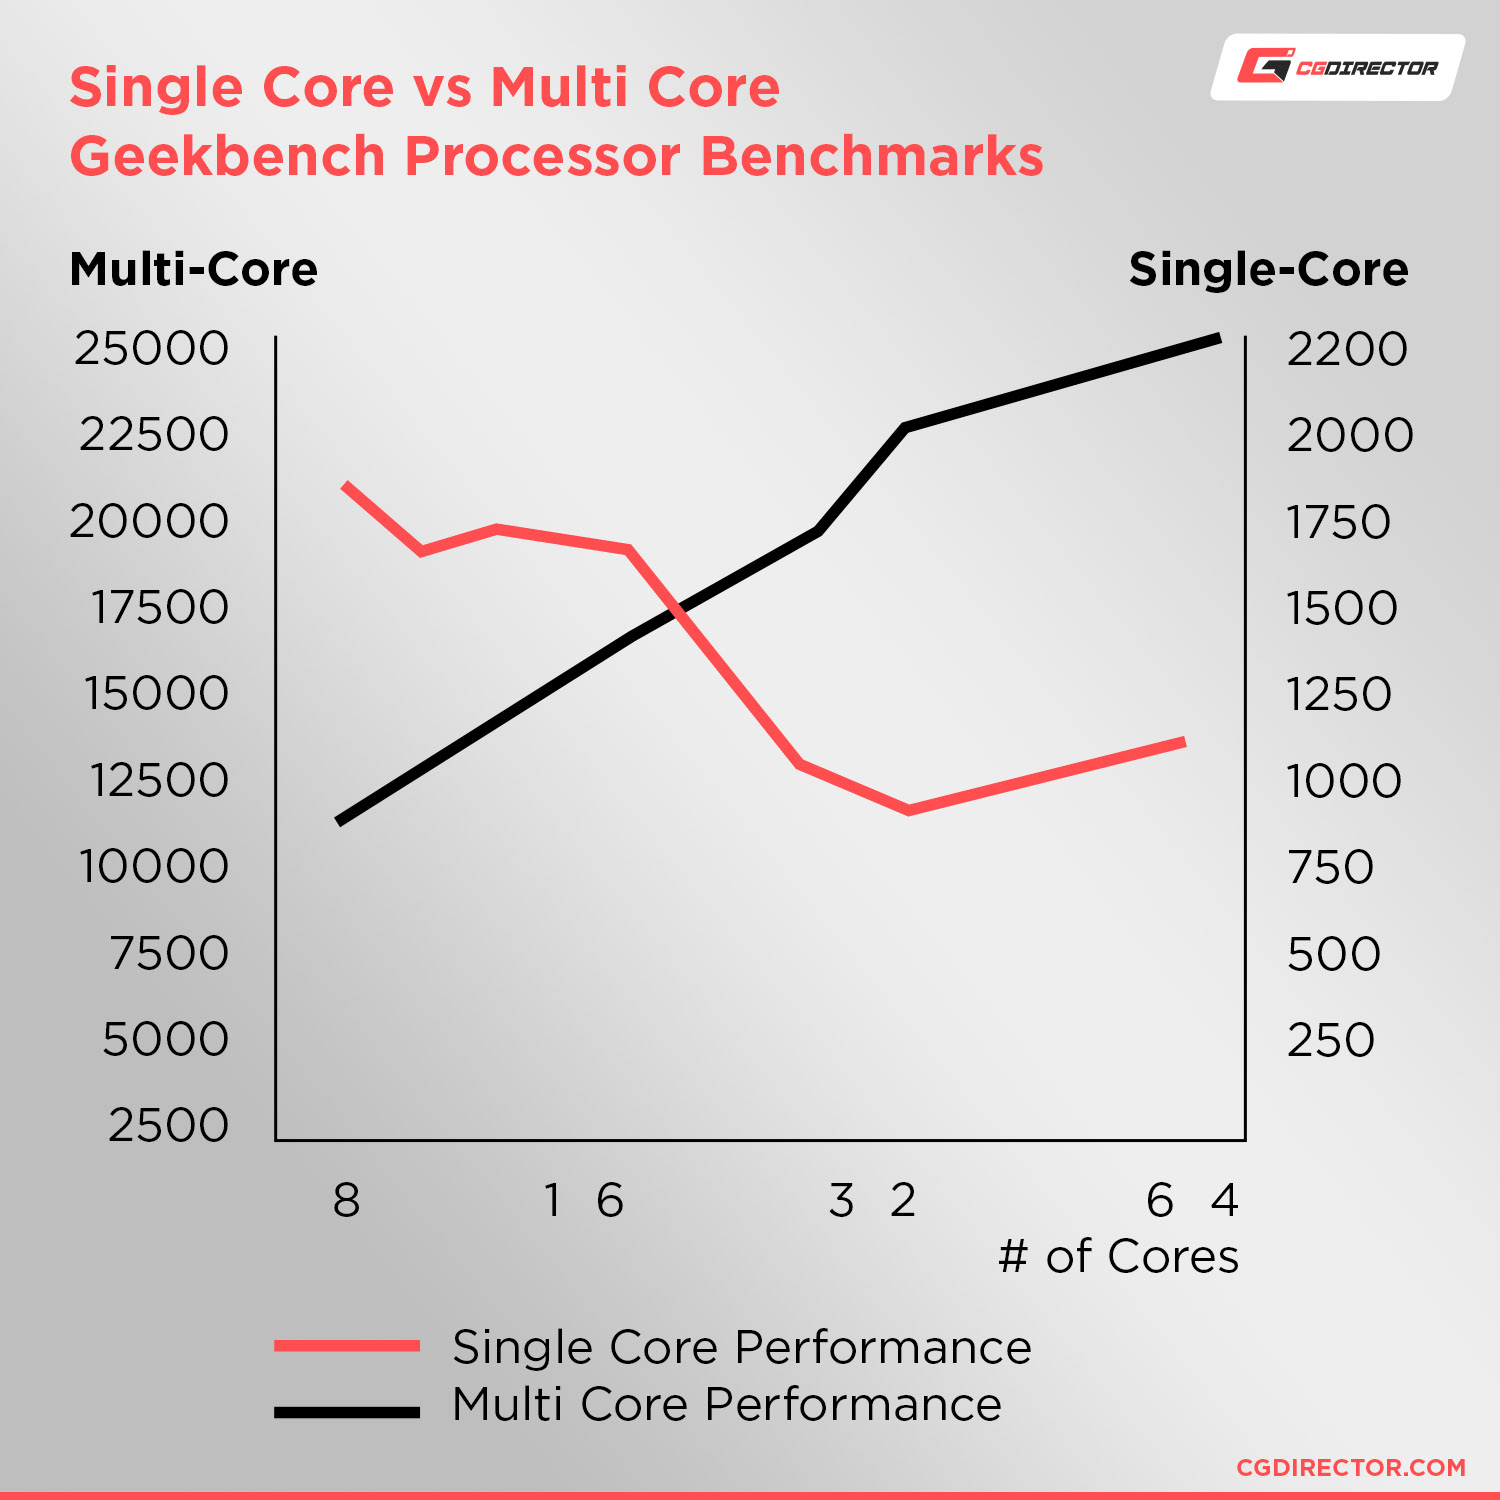 Single-core vs multi-core performance